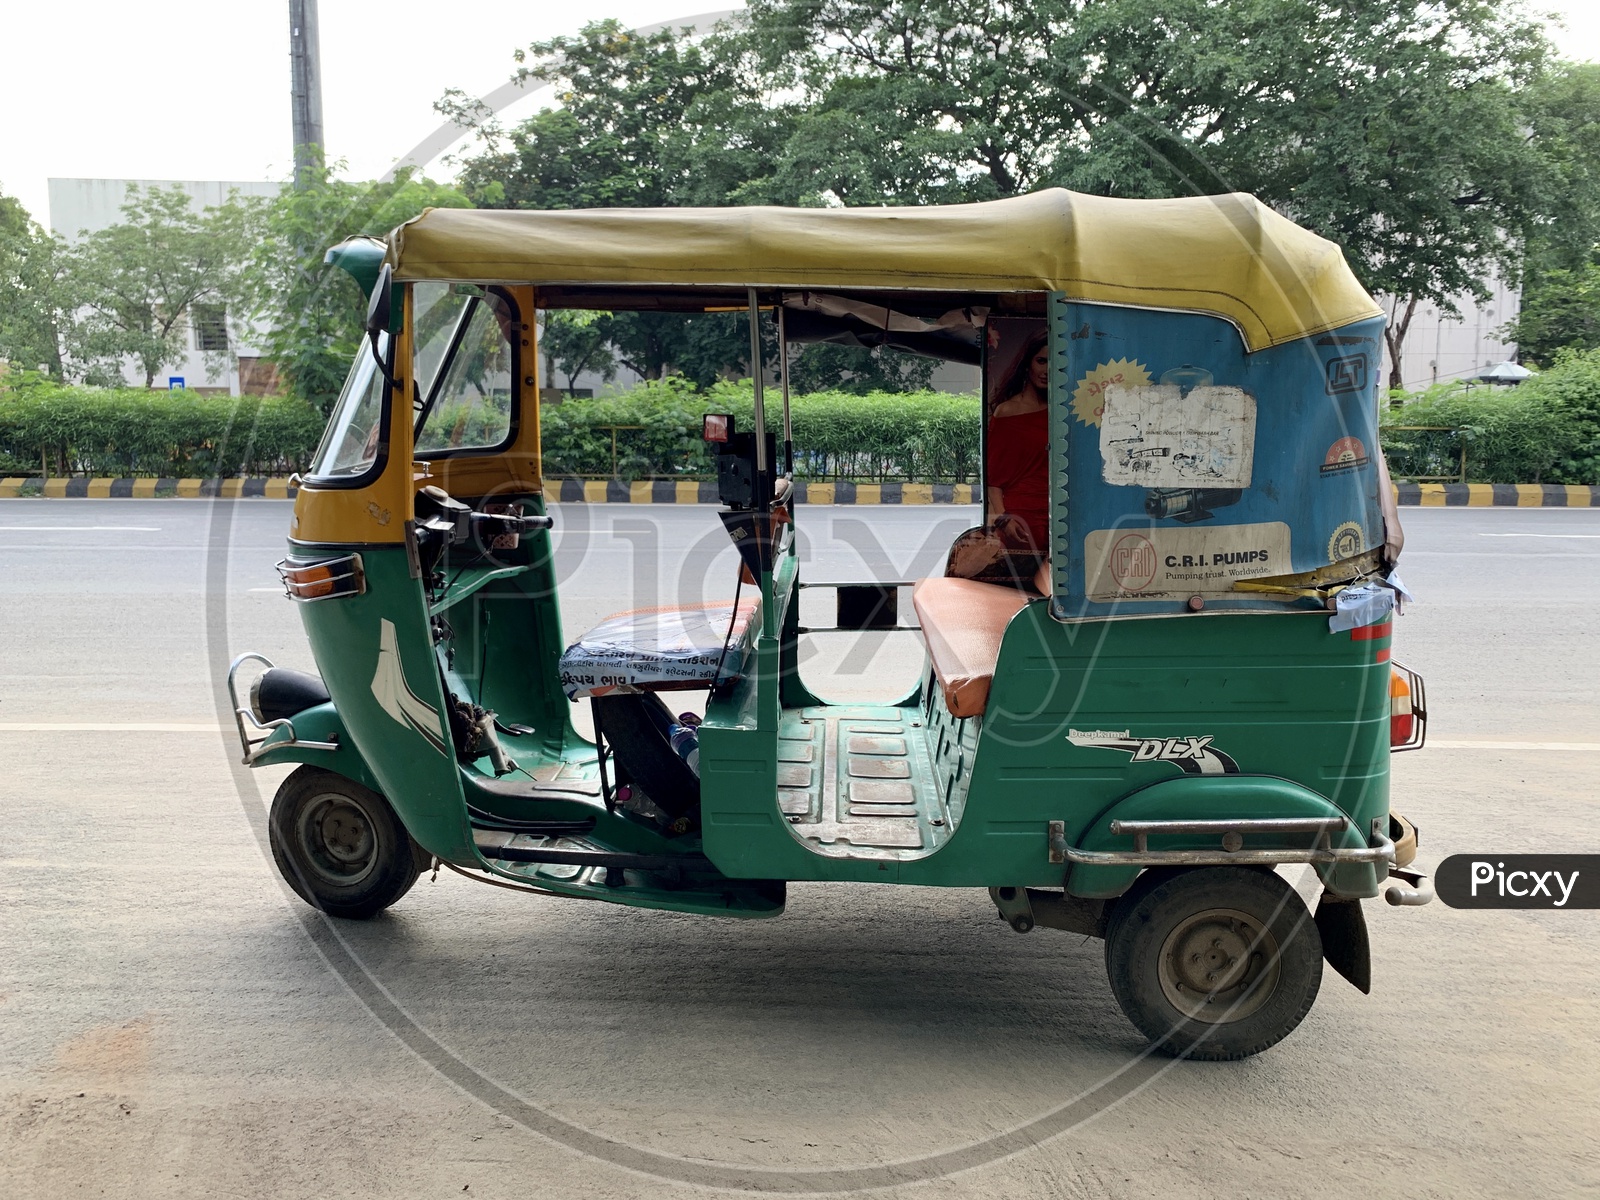 The auto rickshaw